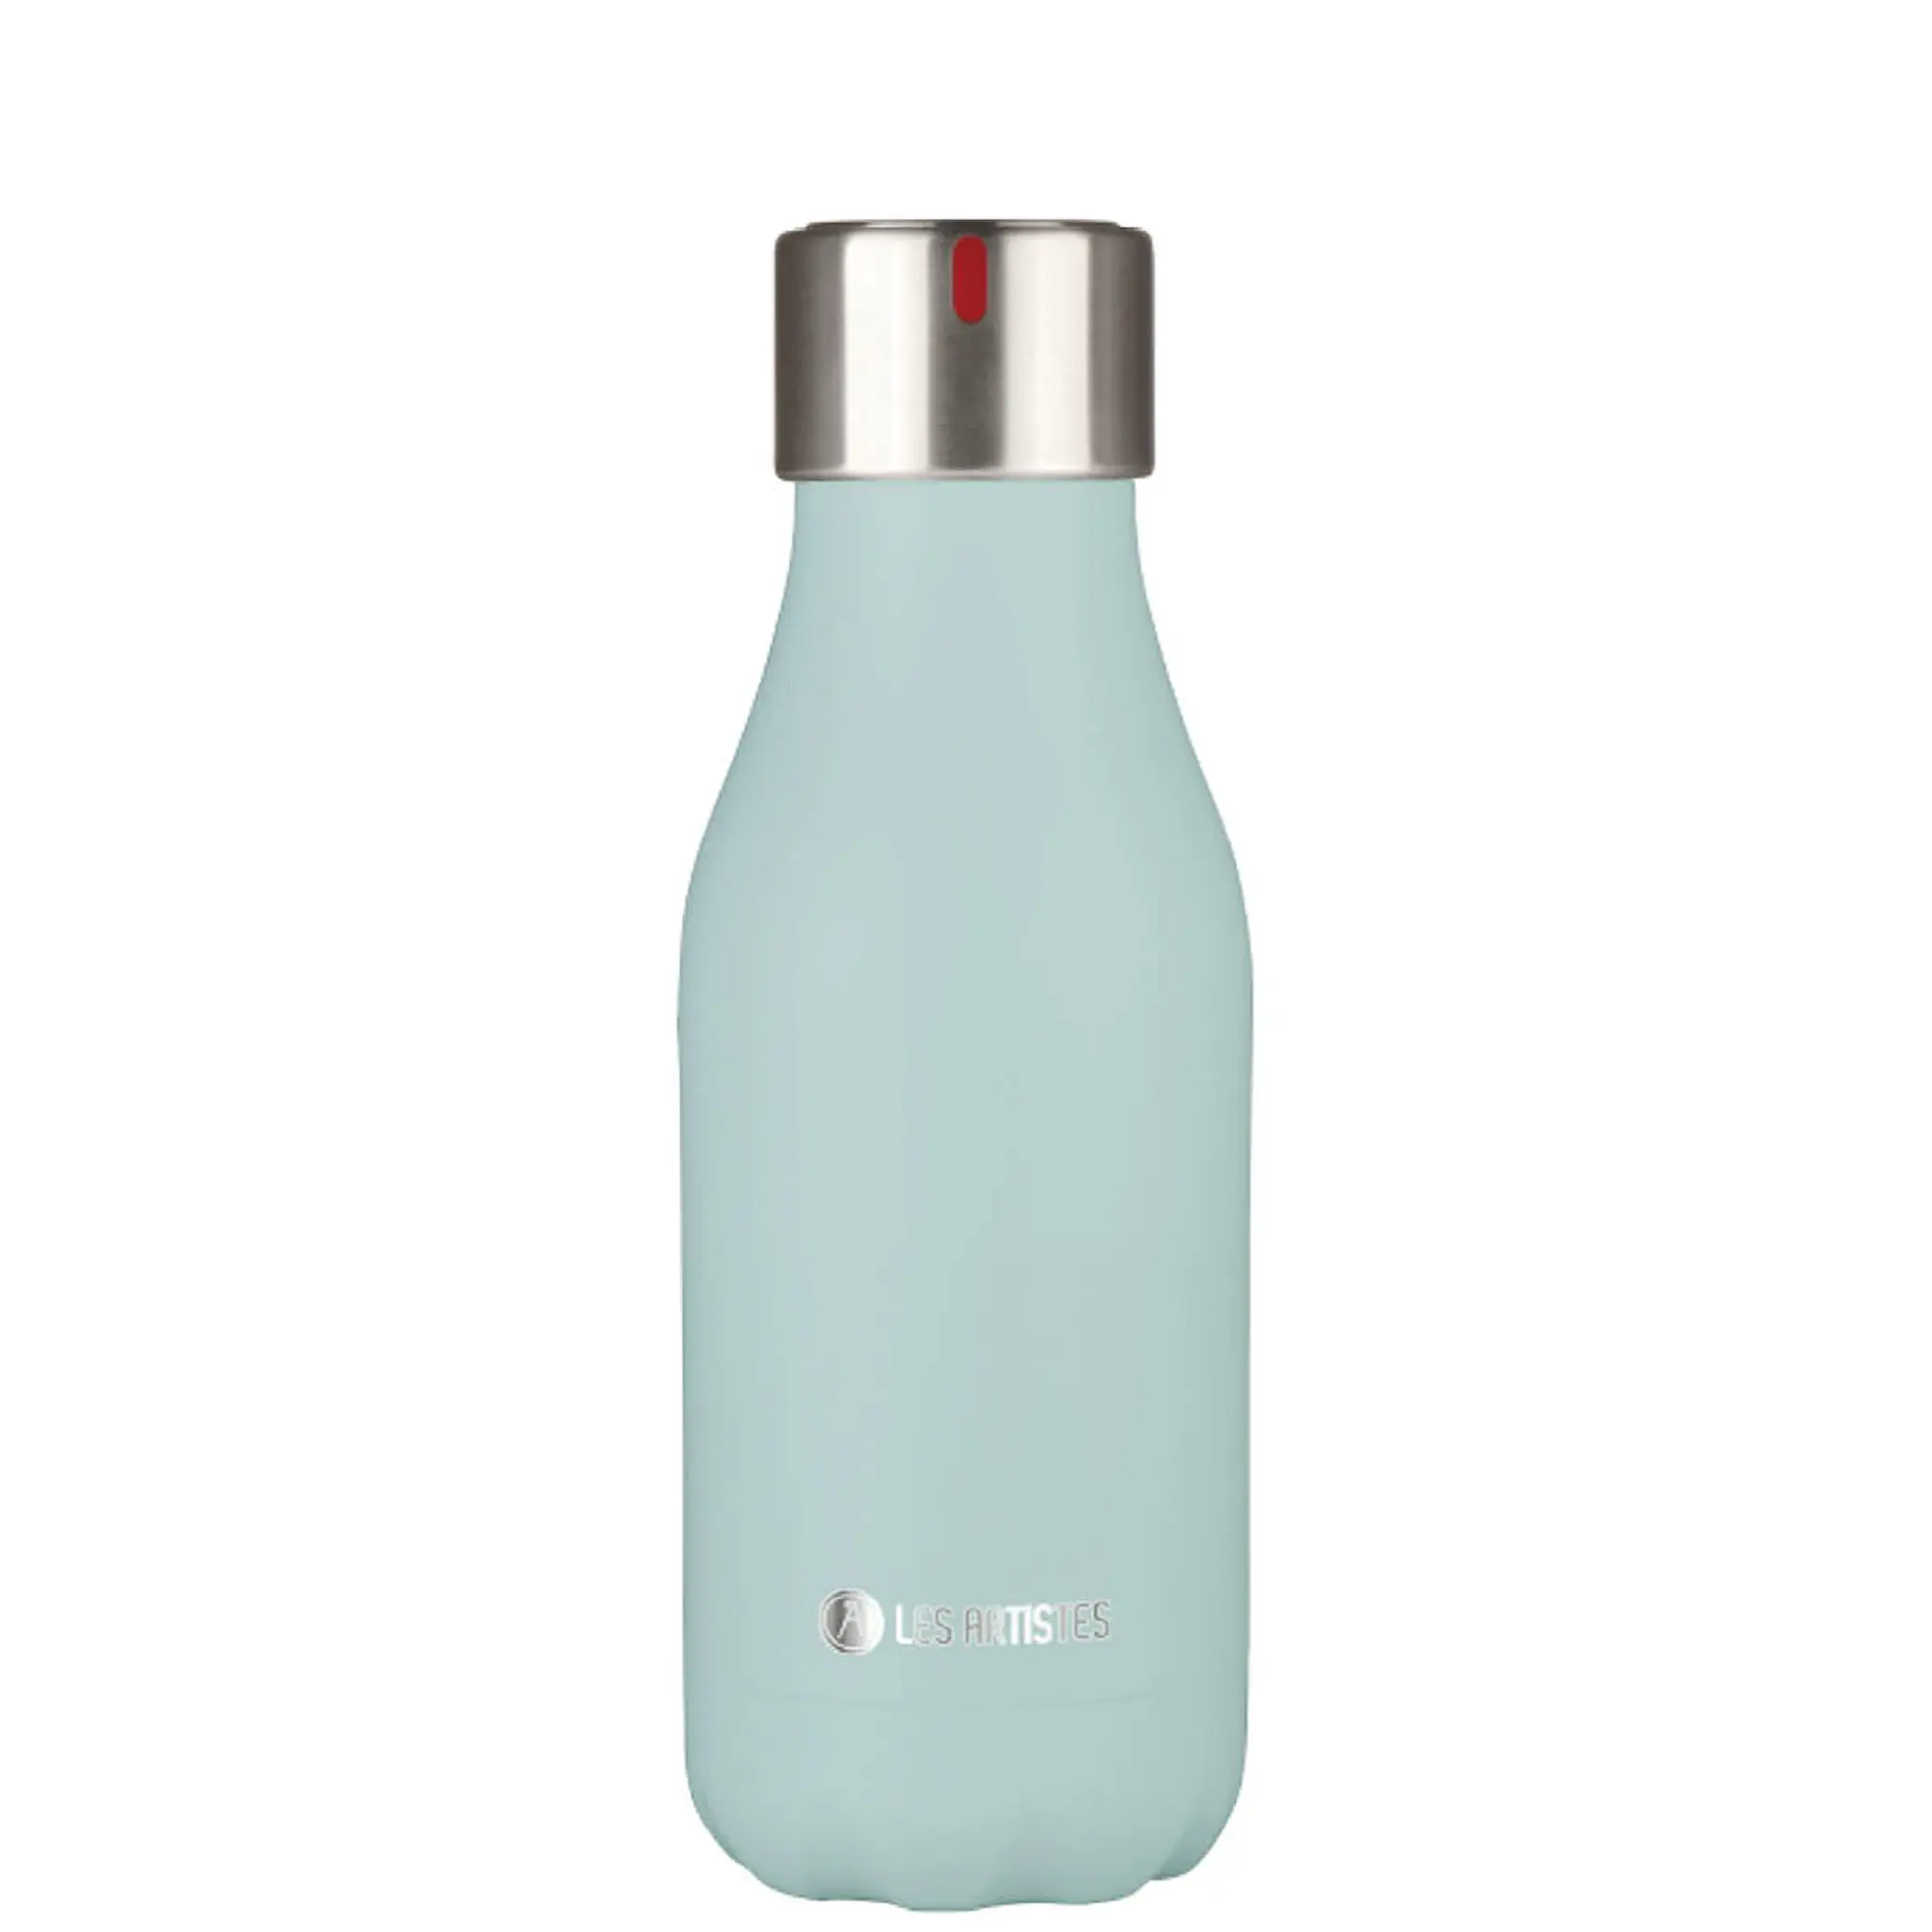 Les Artistes Bottle Up termoflaske 0,28L isblå